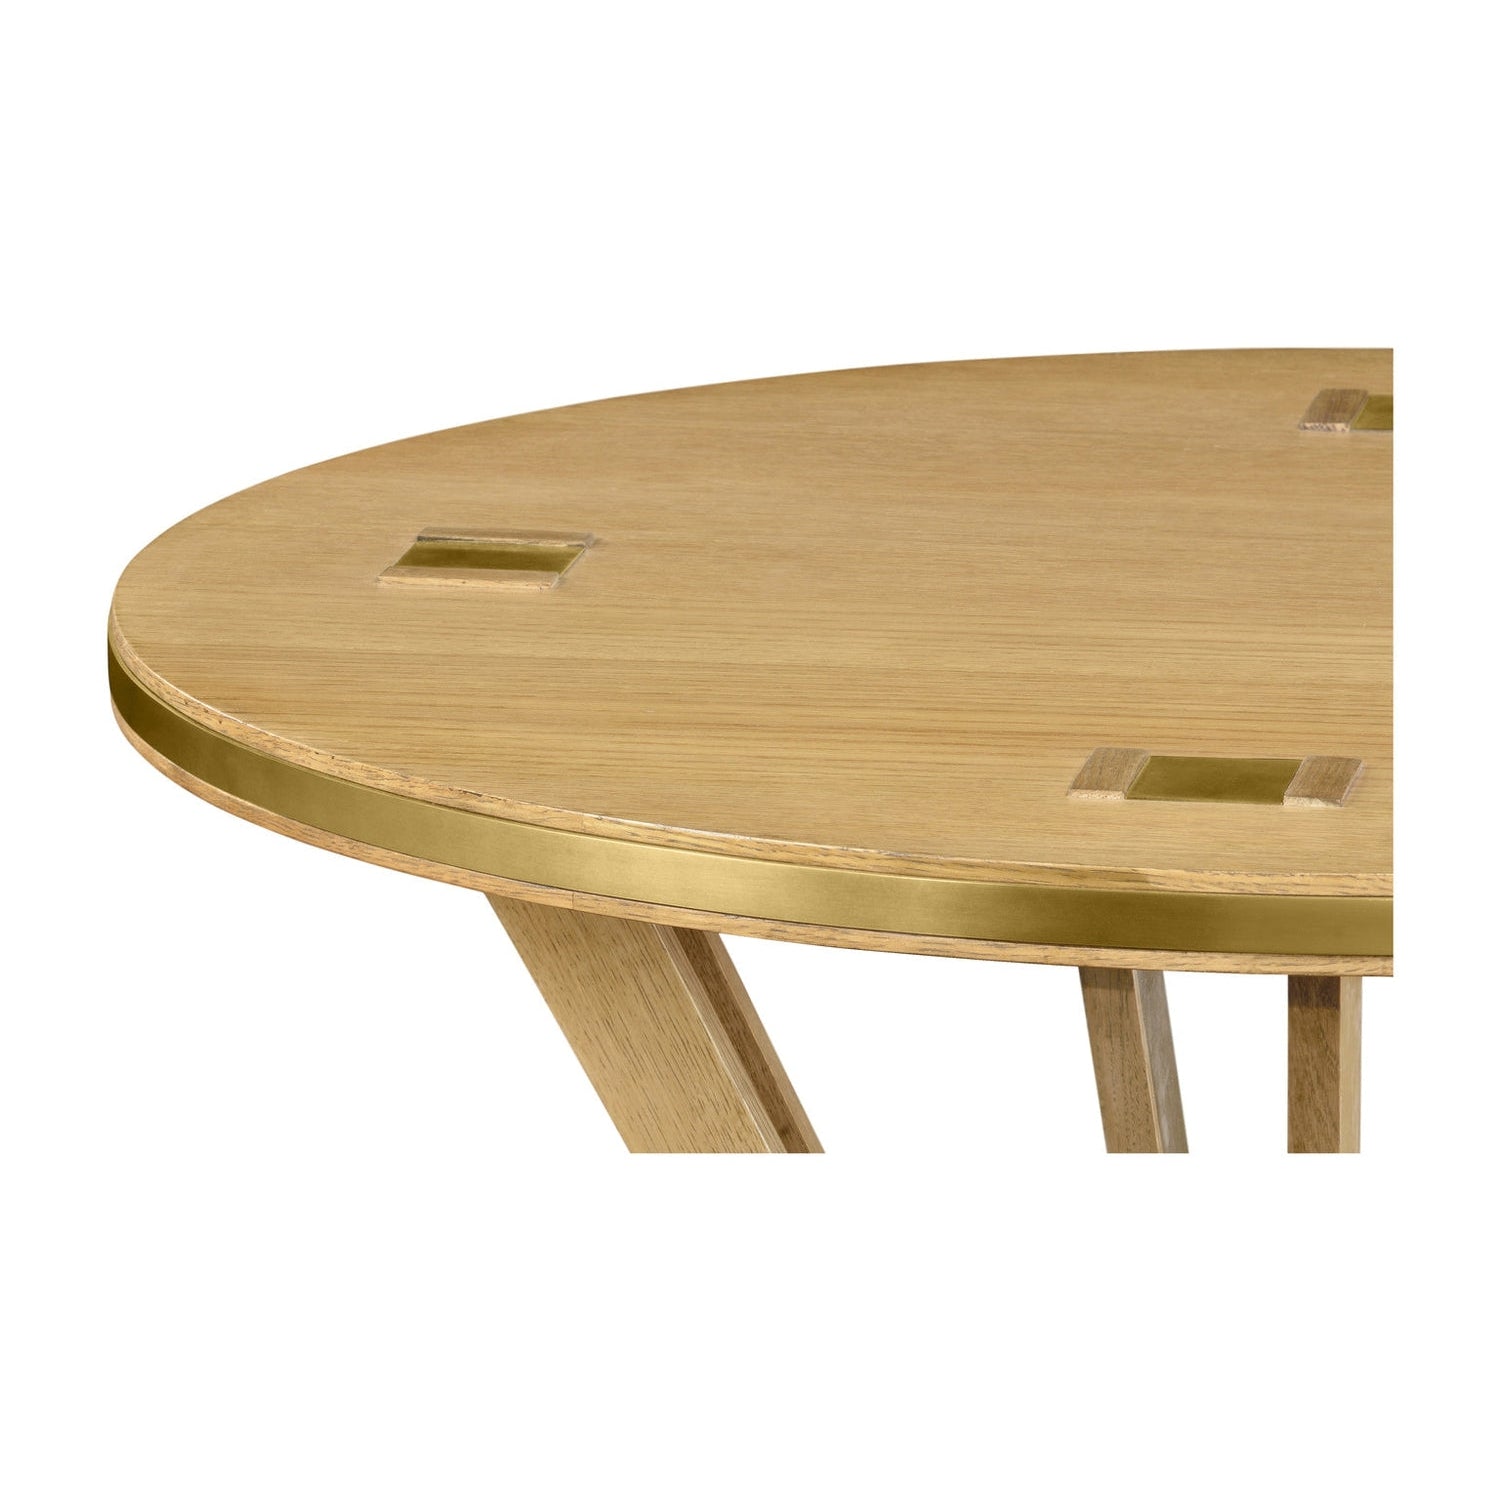 36" Architectural Circular Bar Table-Jonathan Charles-JCHARLES-495443-36D-BT-LWO-Outdoor Bar Tables-2-France and Son